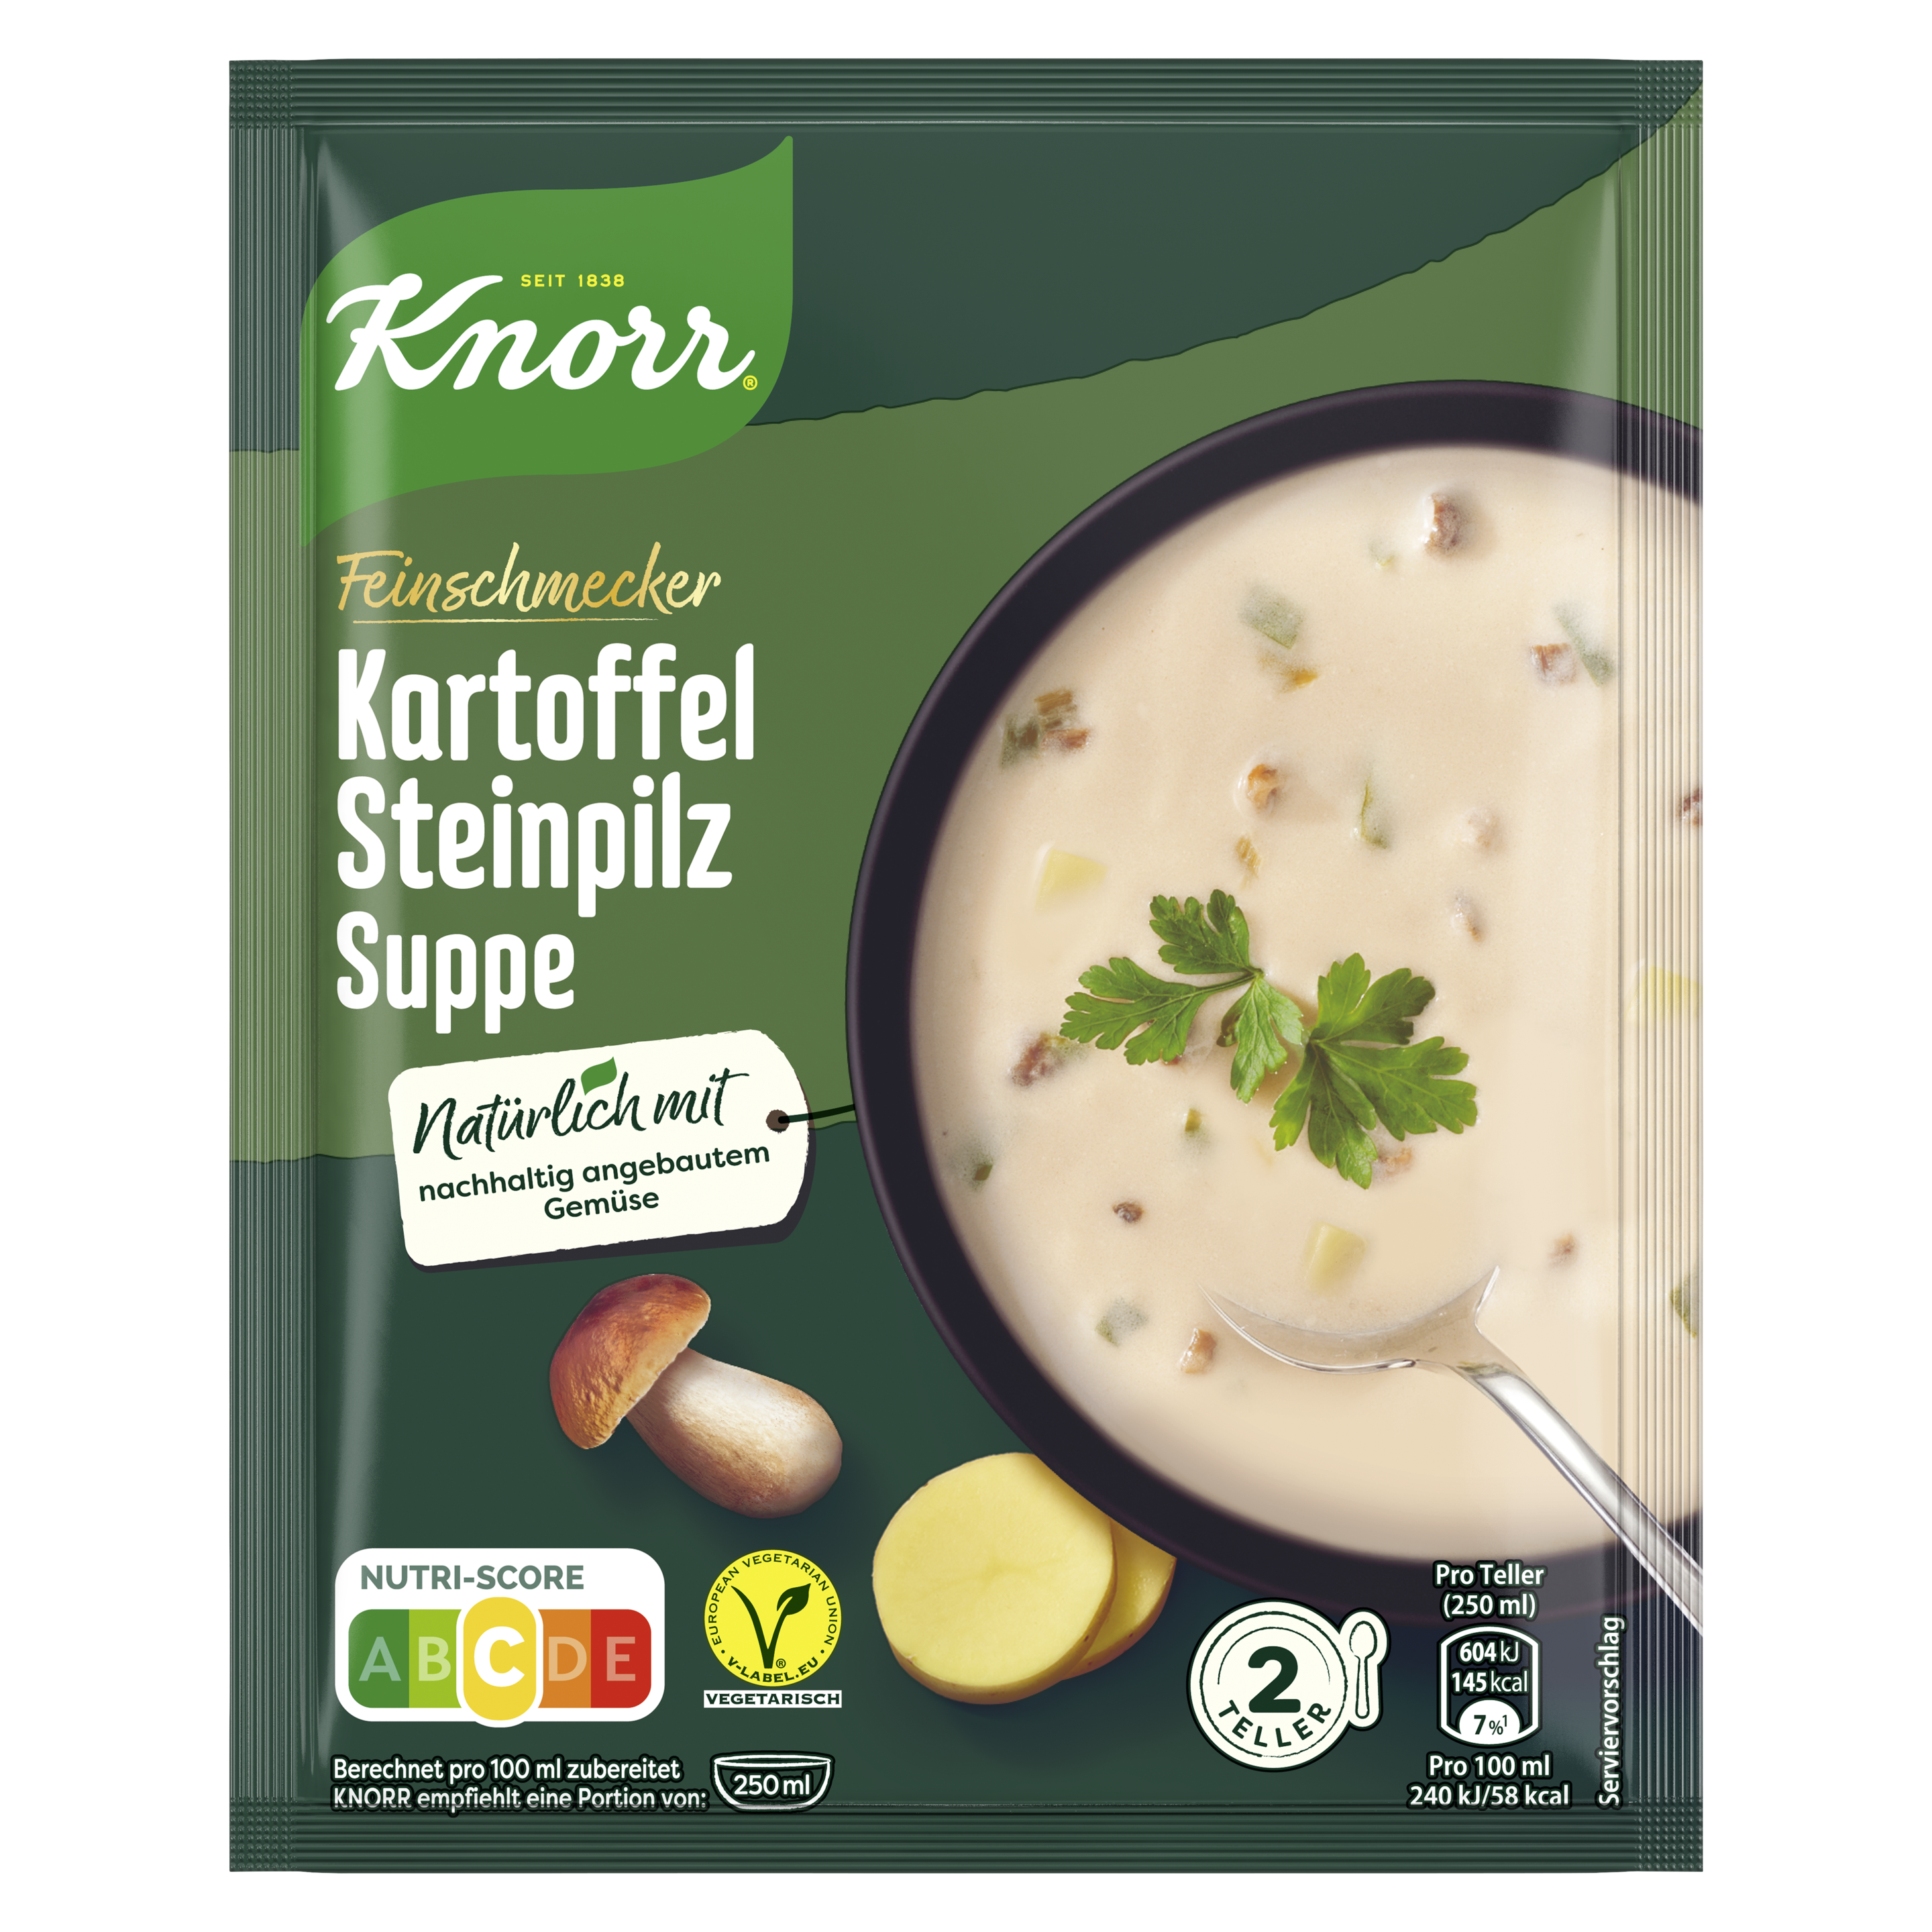 Knorr Feinschmecker Kartoffel Steinpilz Suppe 500ml Beutel